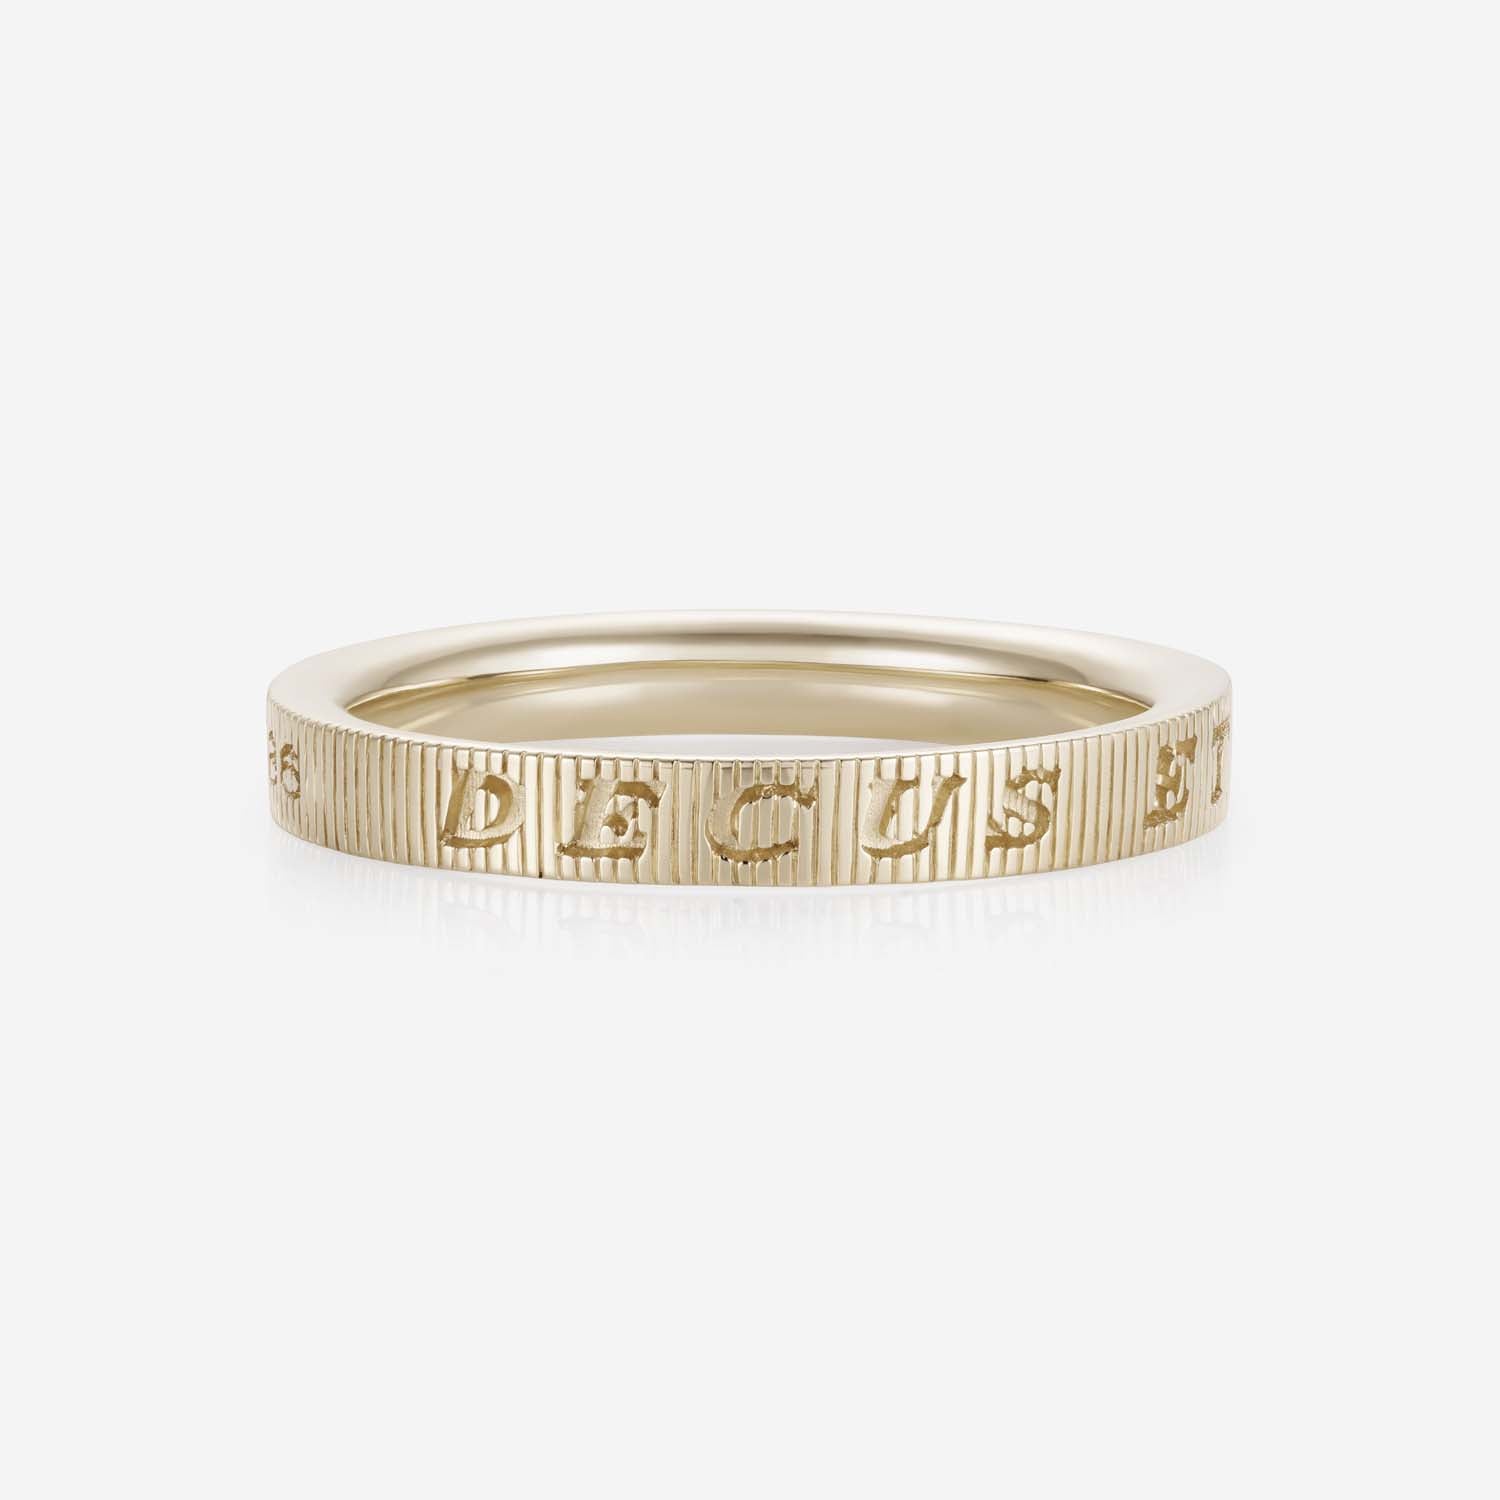 886 Royal Mint Rings Tutamen Small Ring 9ct Yellow Gold